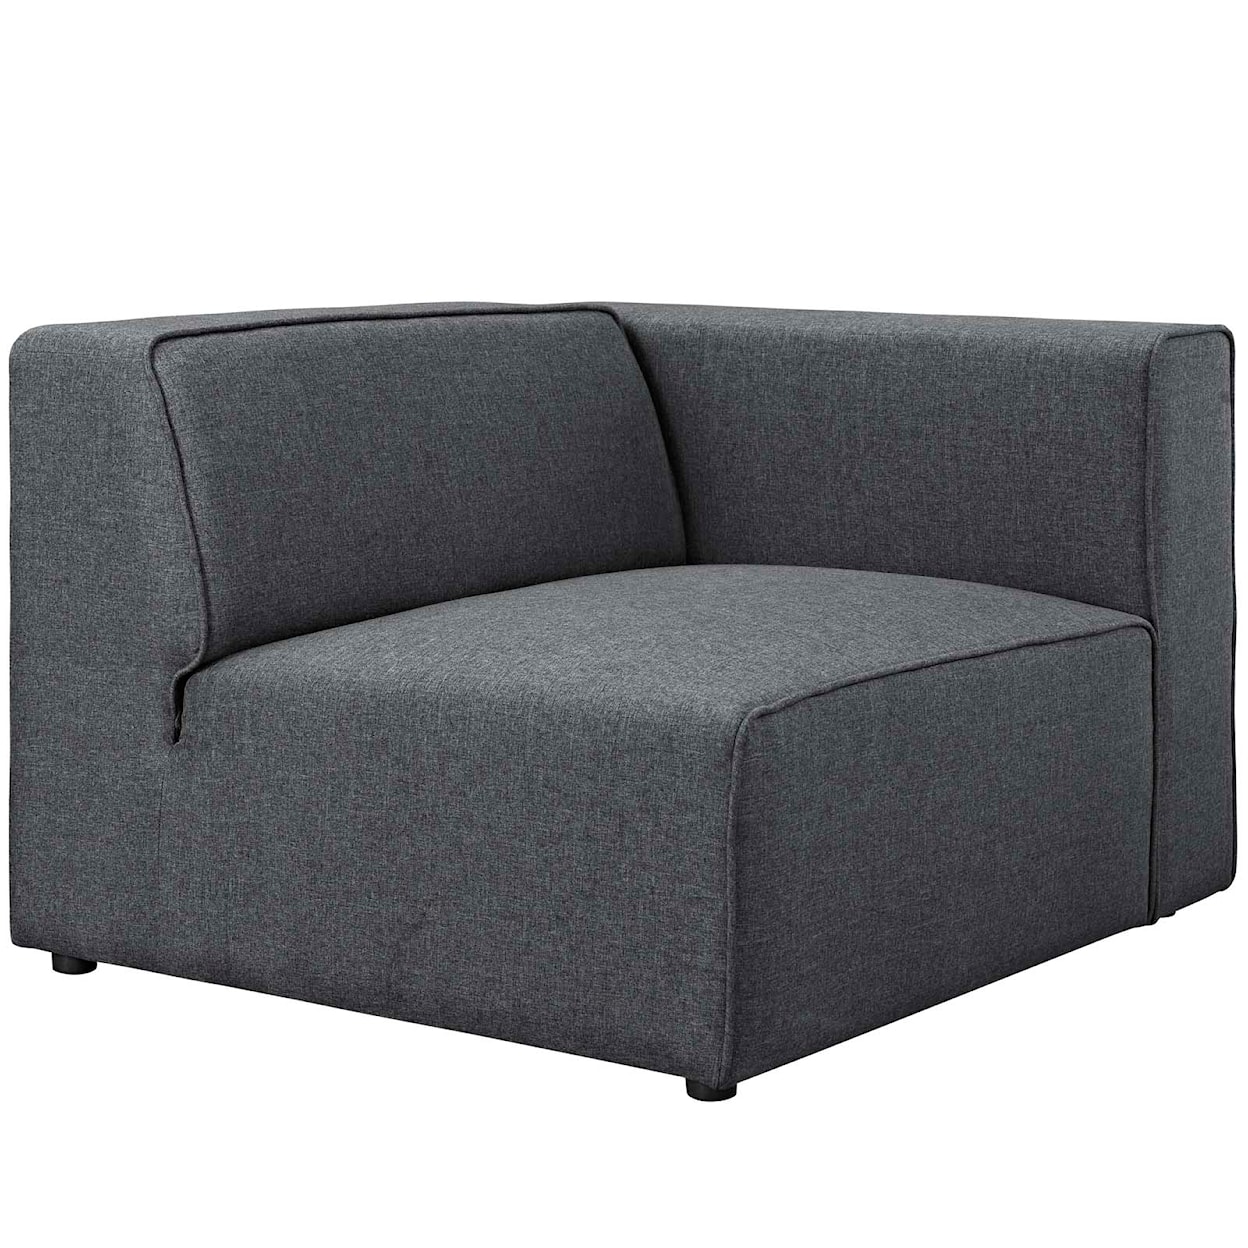 Modway Mingle 7 Piece Sectional Sofa Set